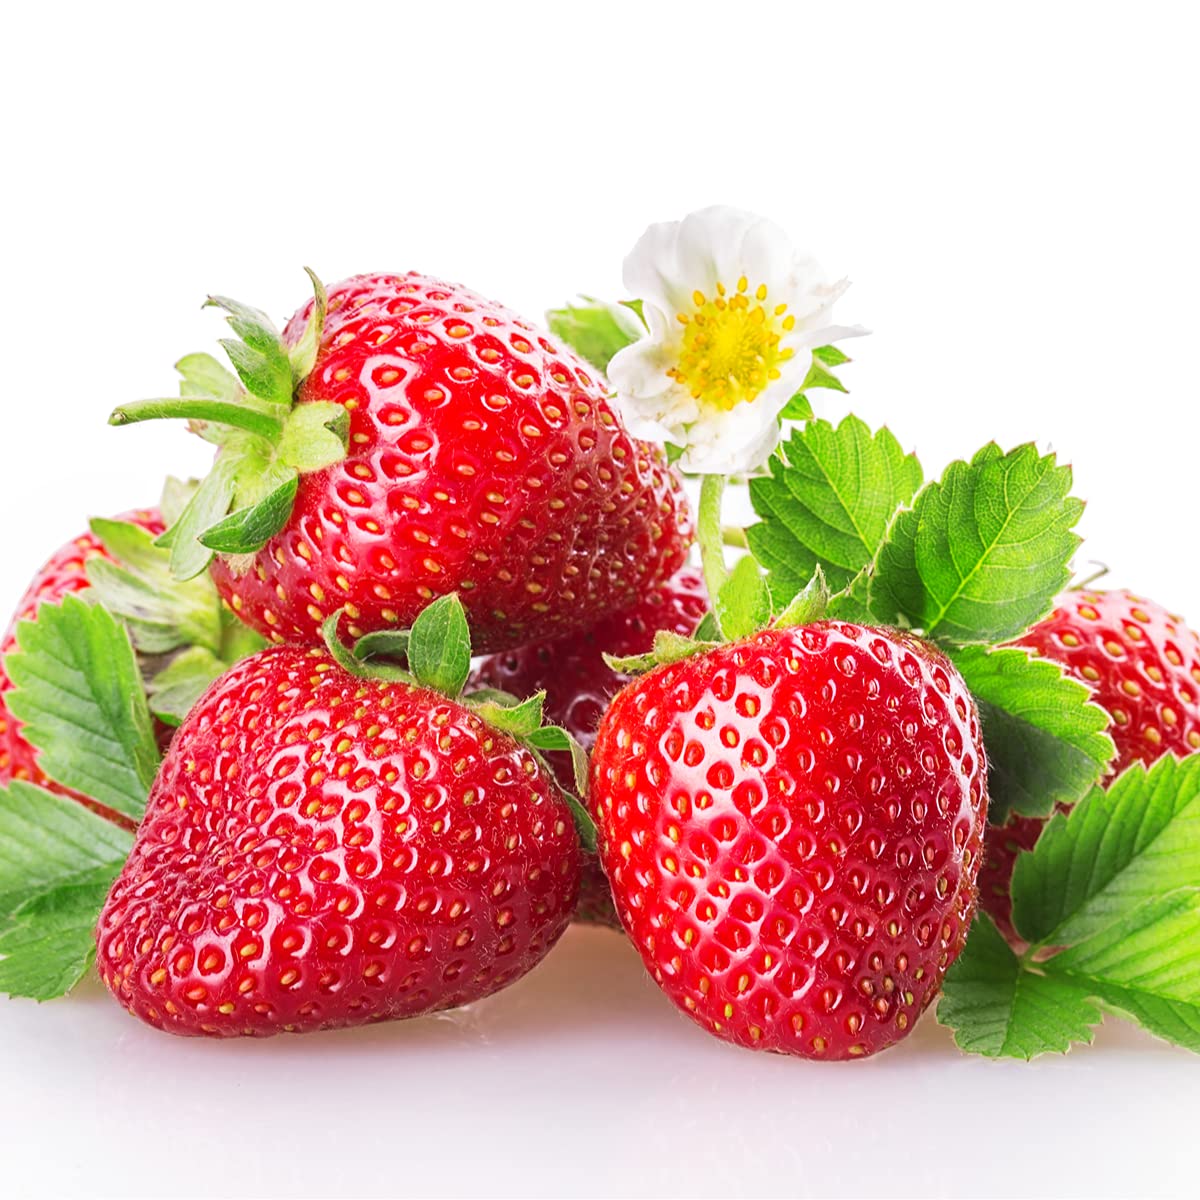 Strawberry Plants - 'Malling Centenary' - 5 x Full Plants in 9cm Pots - AcquaGarden